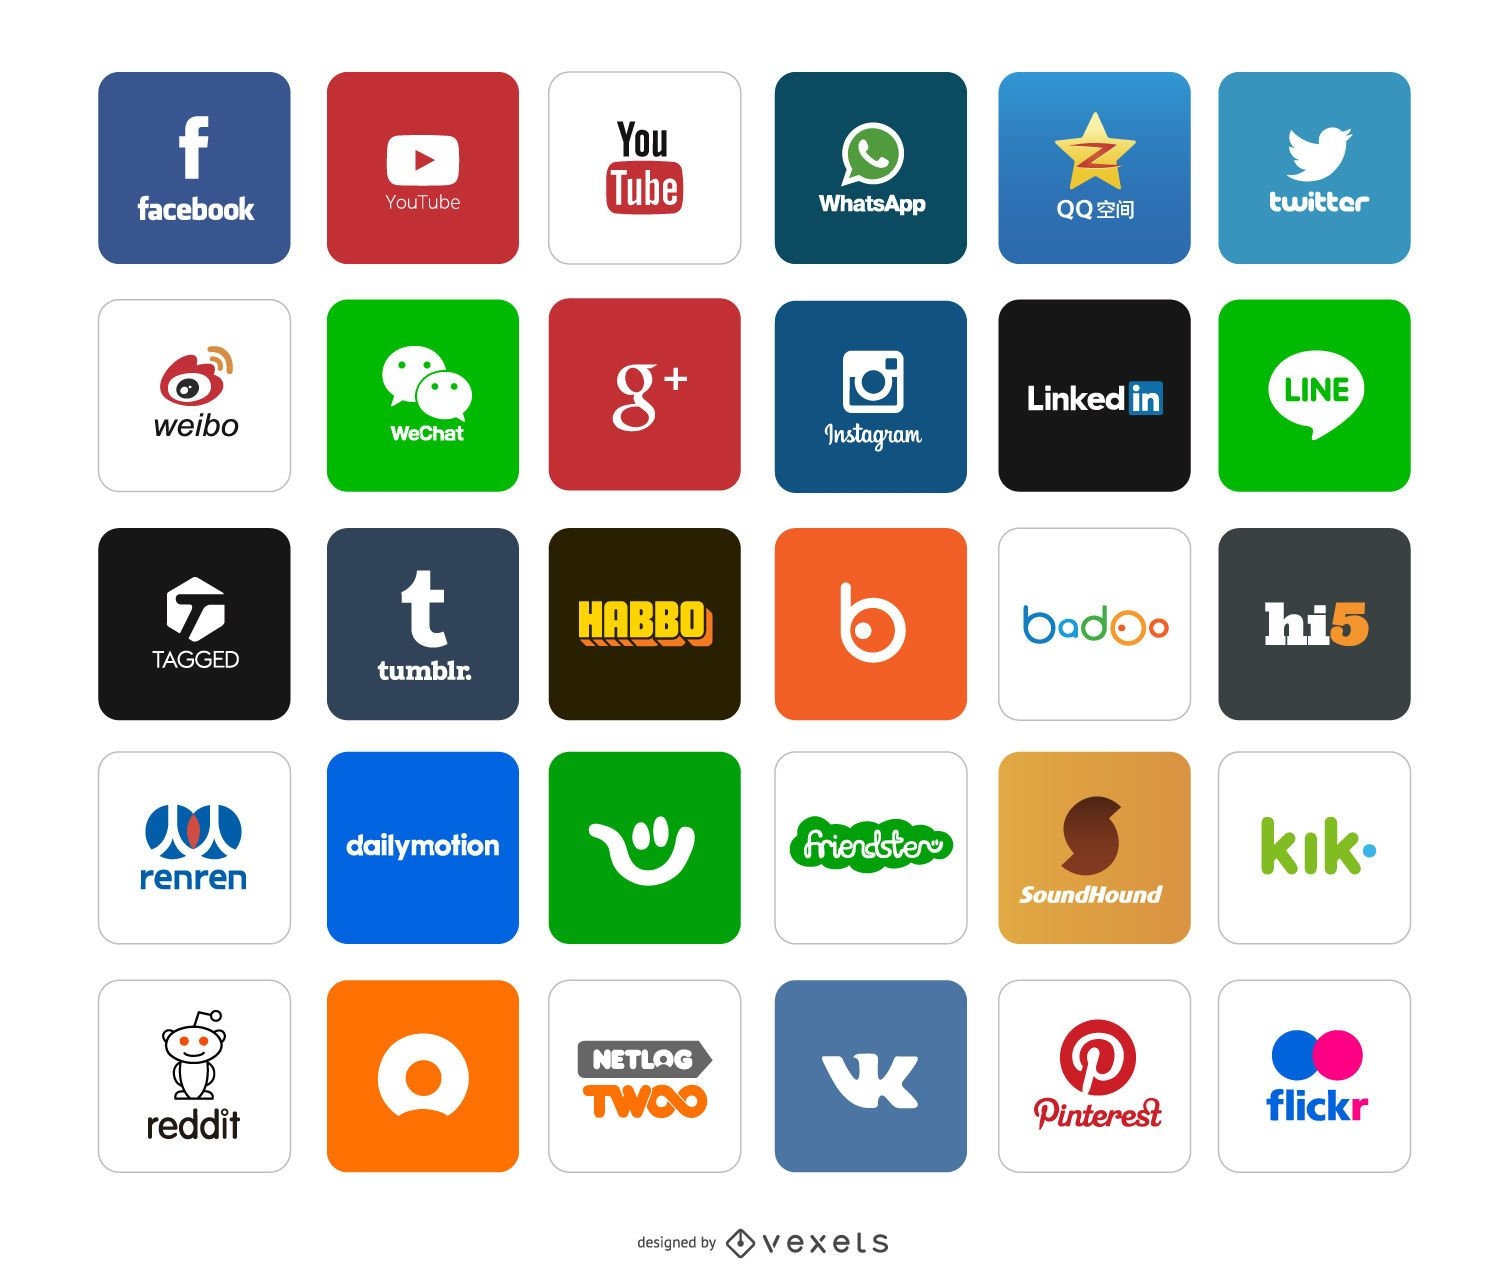 Symbole und Logos für soziale Apps